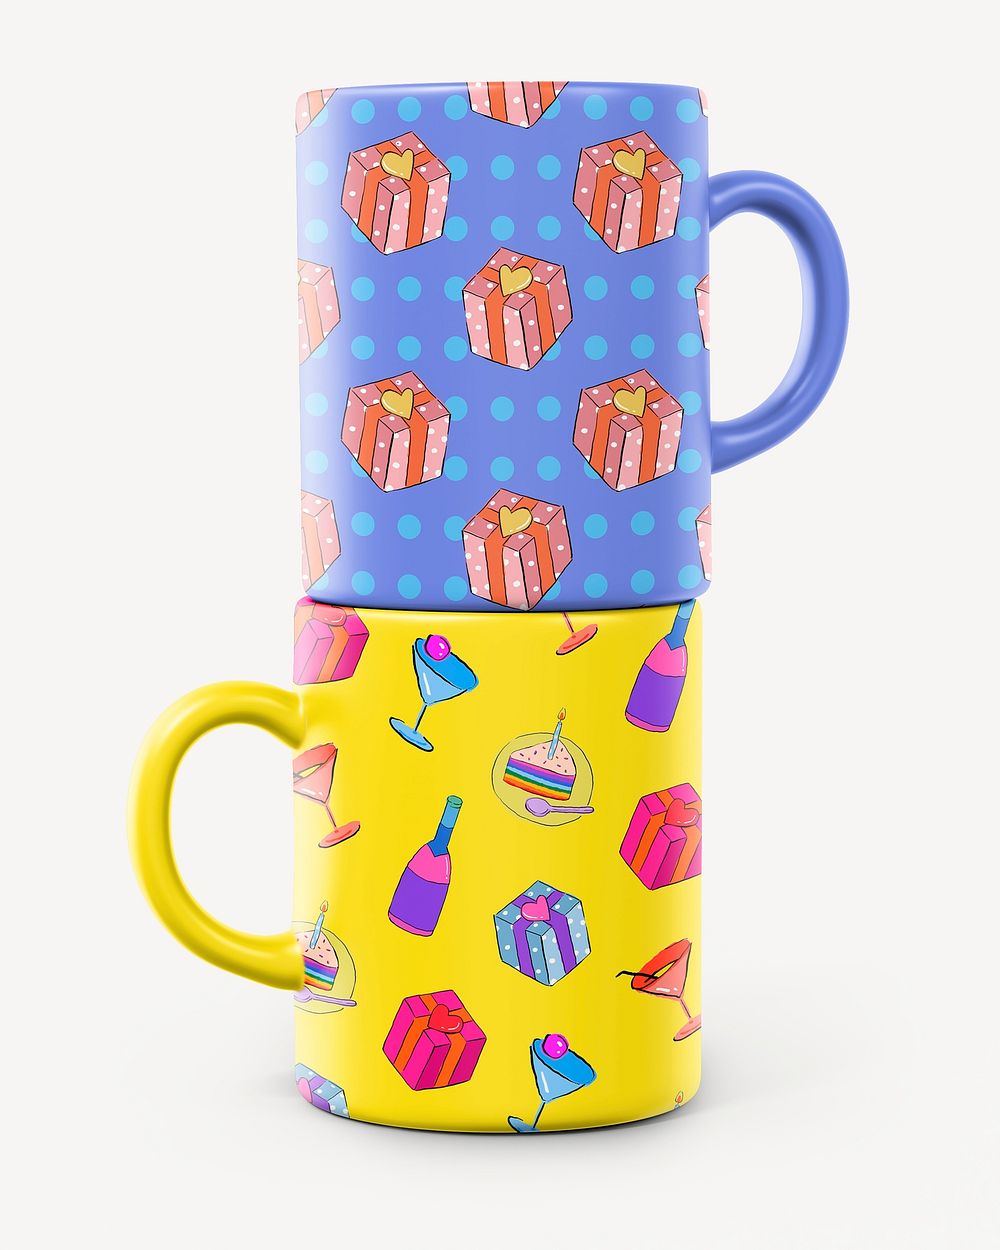 Ceramic coffee mug mockup, cute pattern design psd